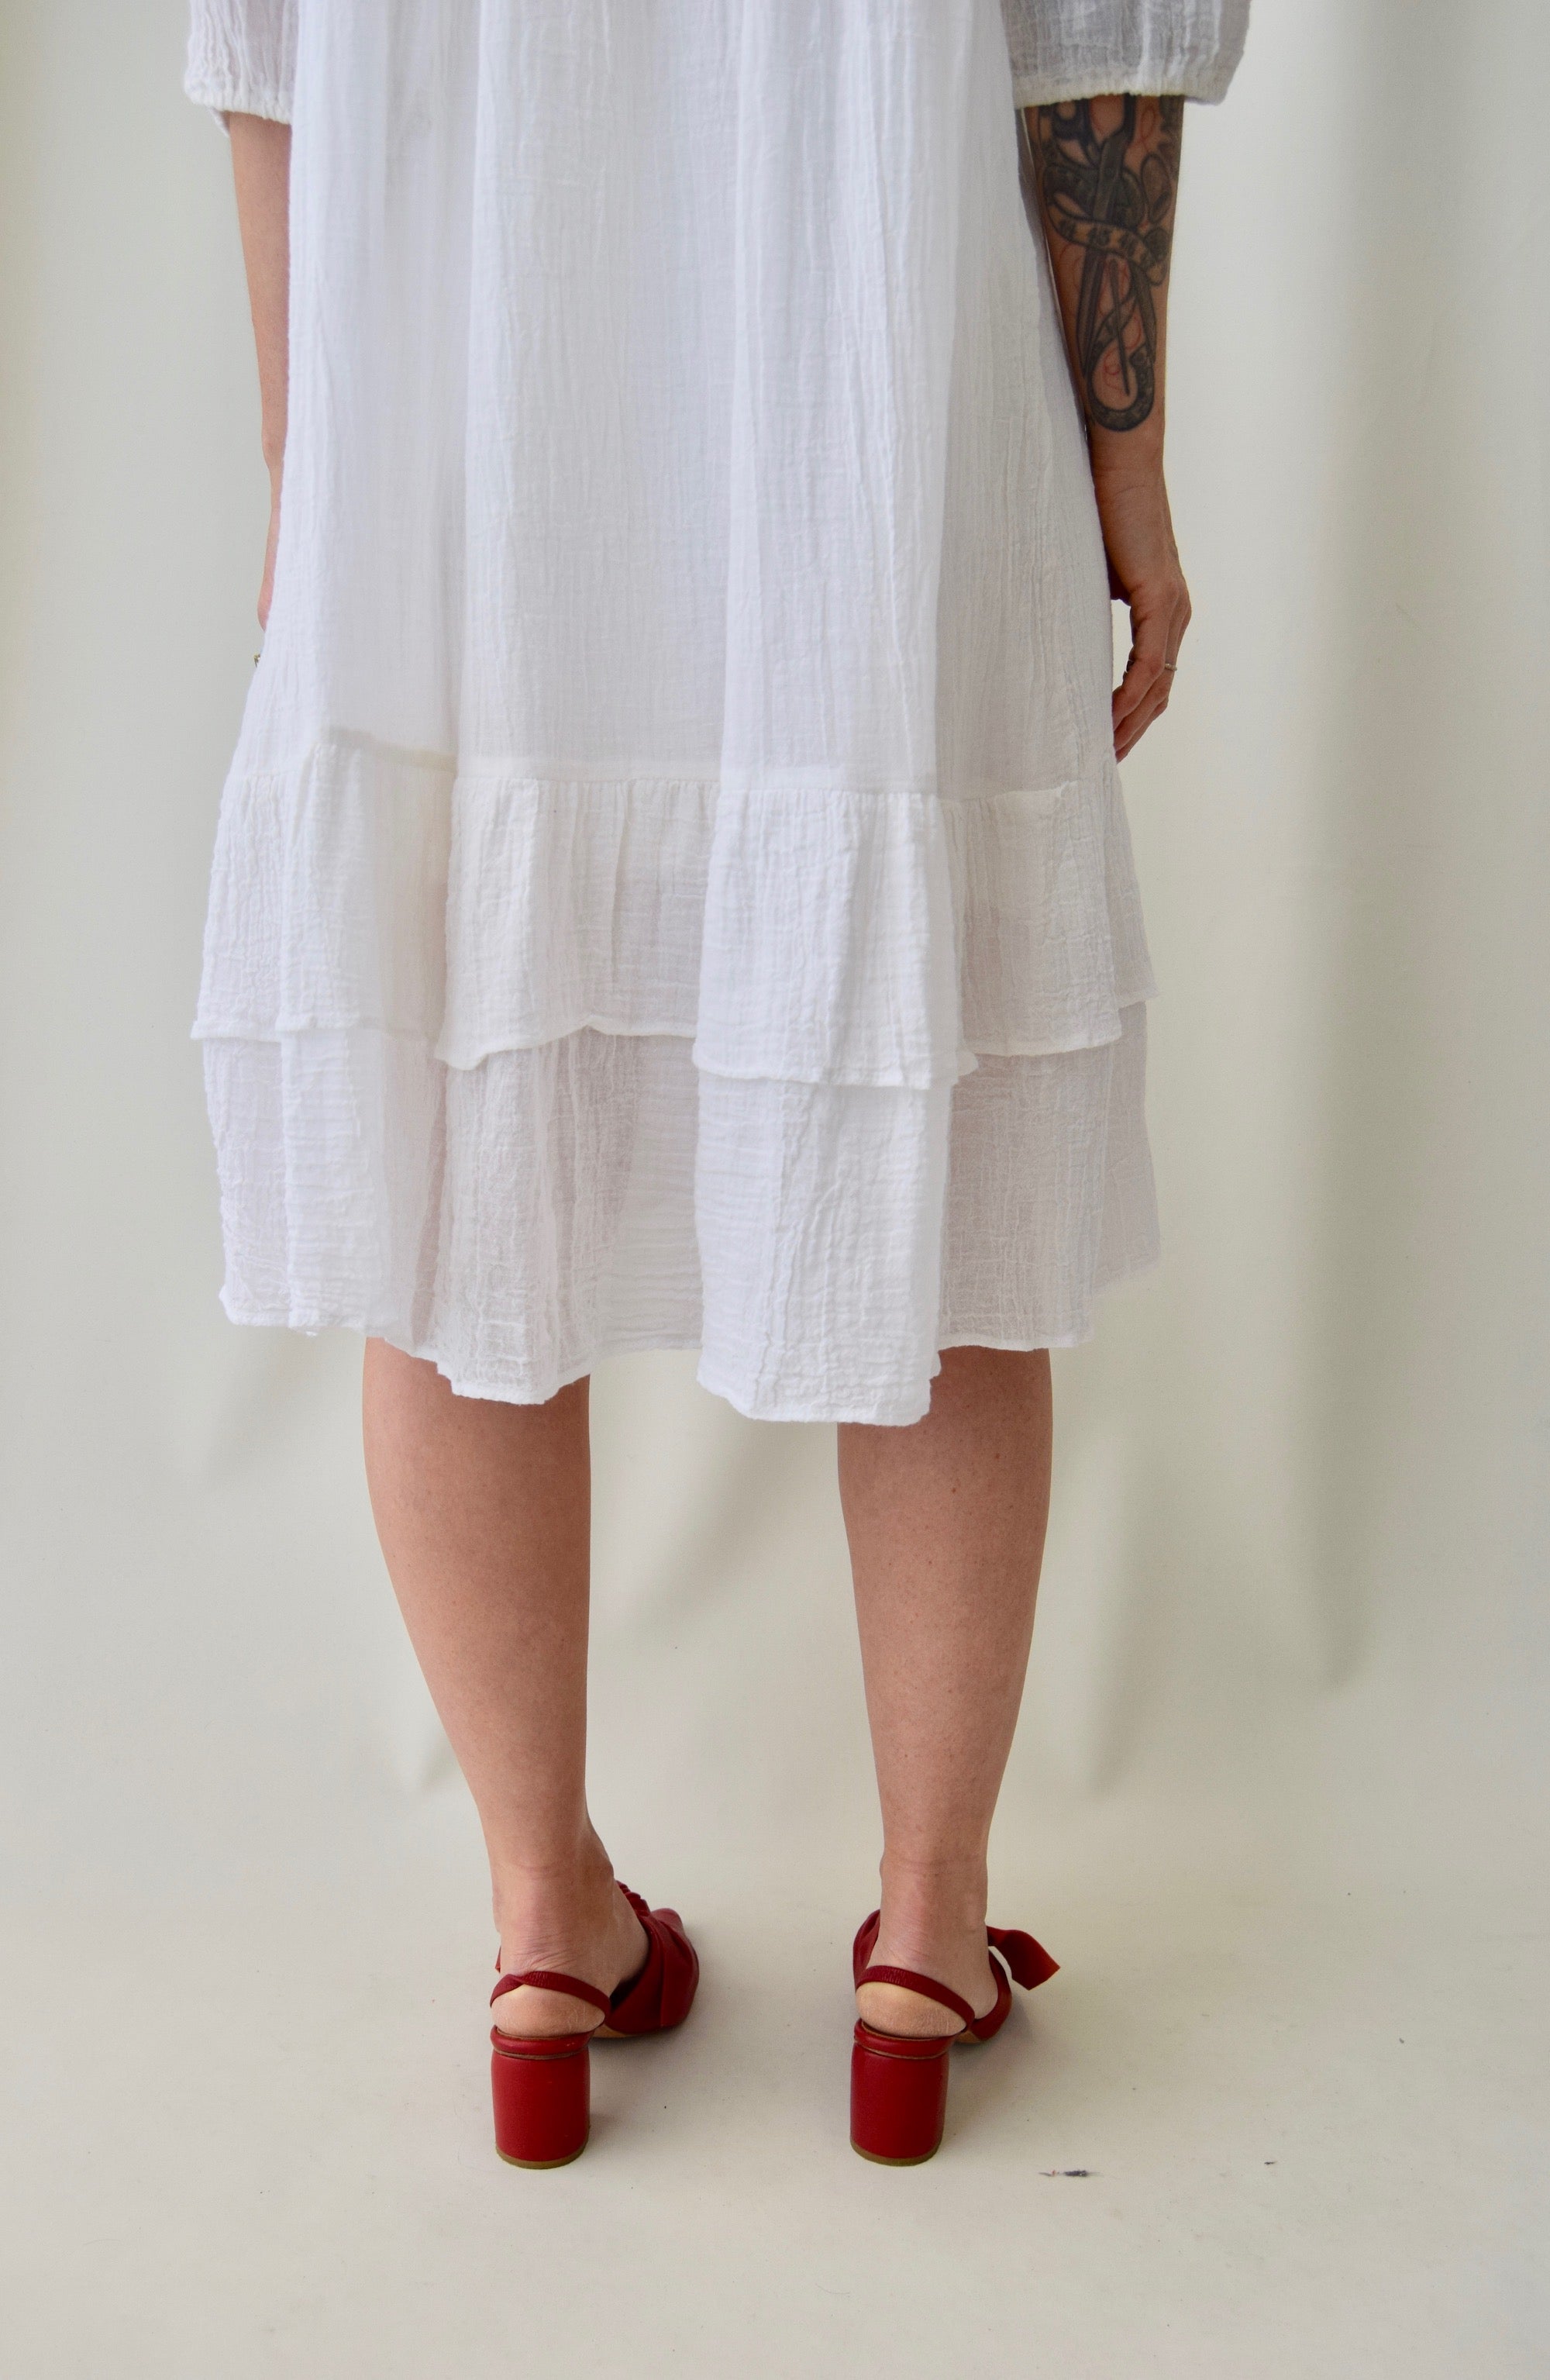 White Sheer Gauze Cotton Lace Dress